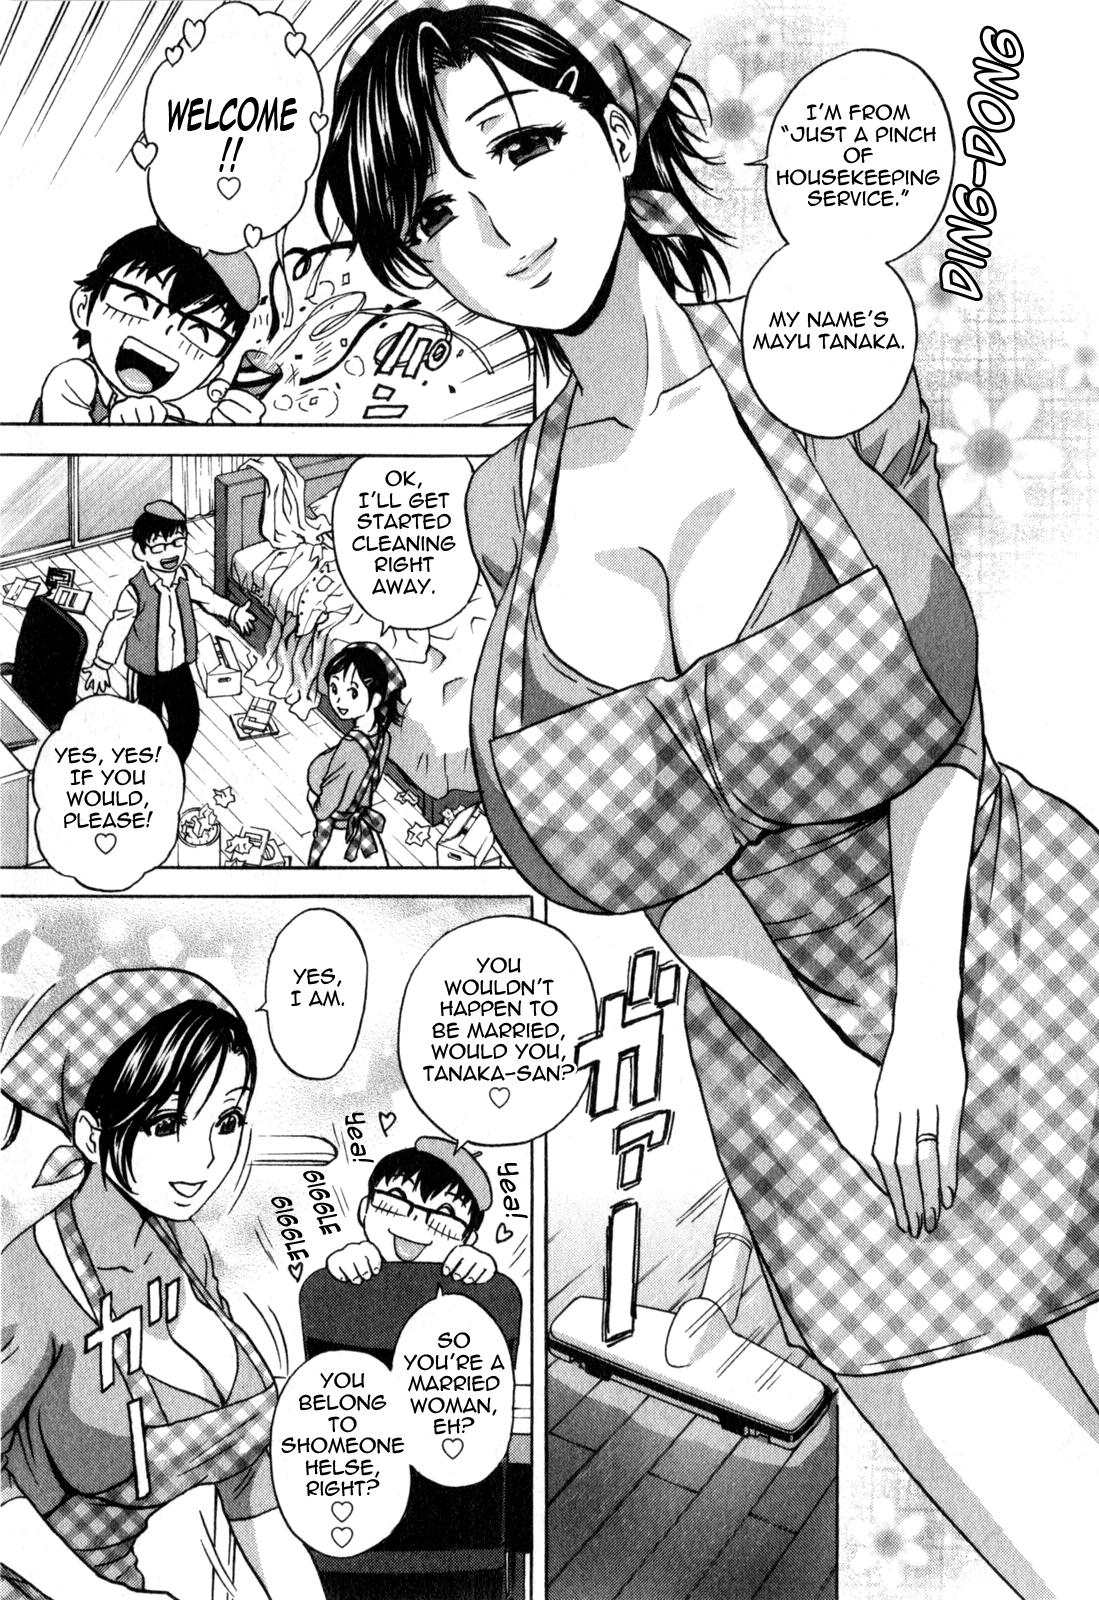 [Hidemaru] Life with Married Women Just Like a Manga 3 - Ch. 1-6 [English] {Tadanohito} 73